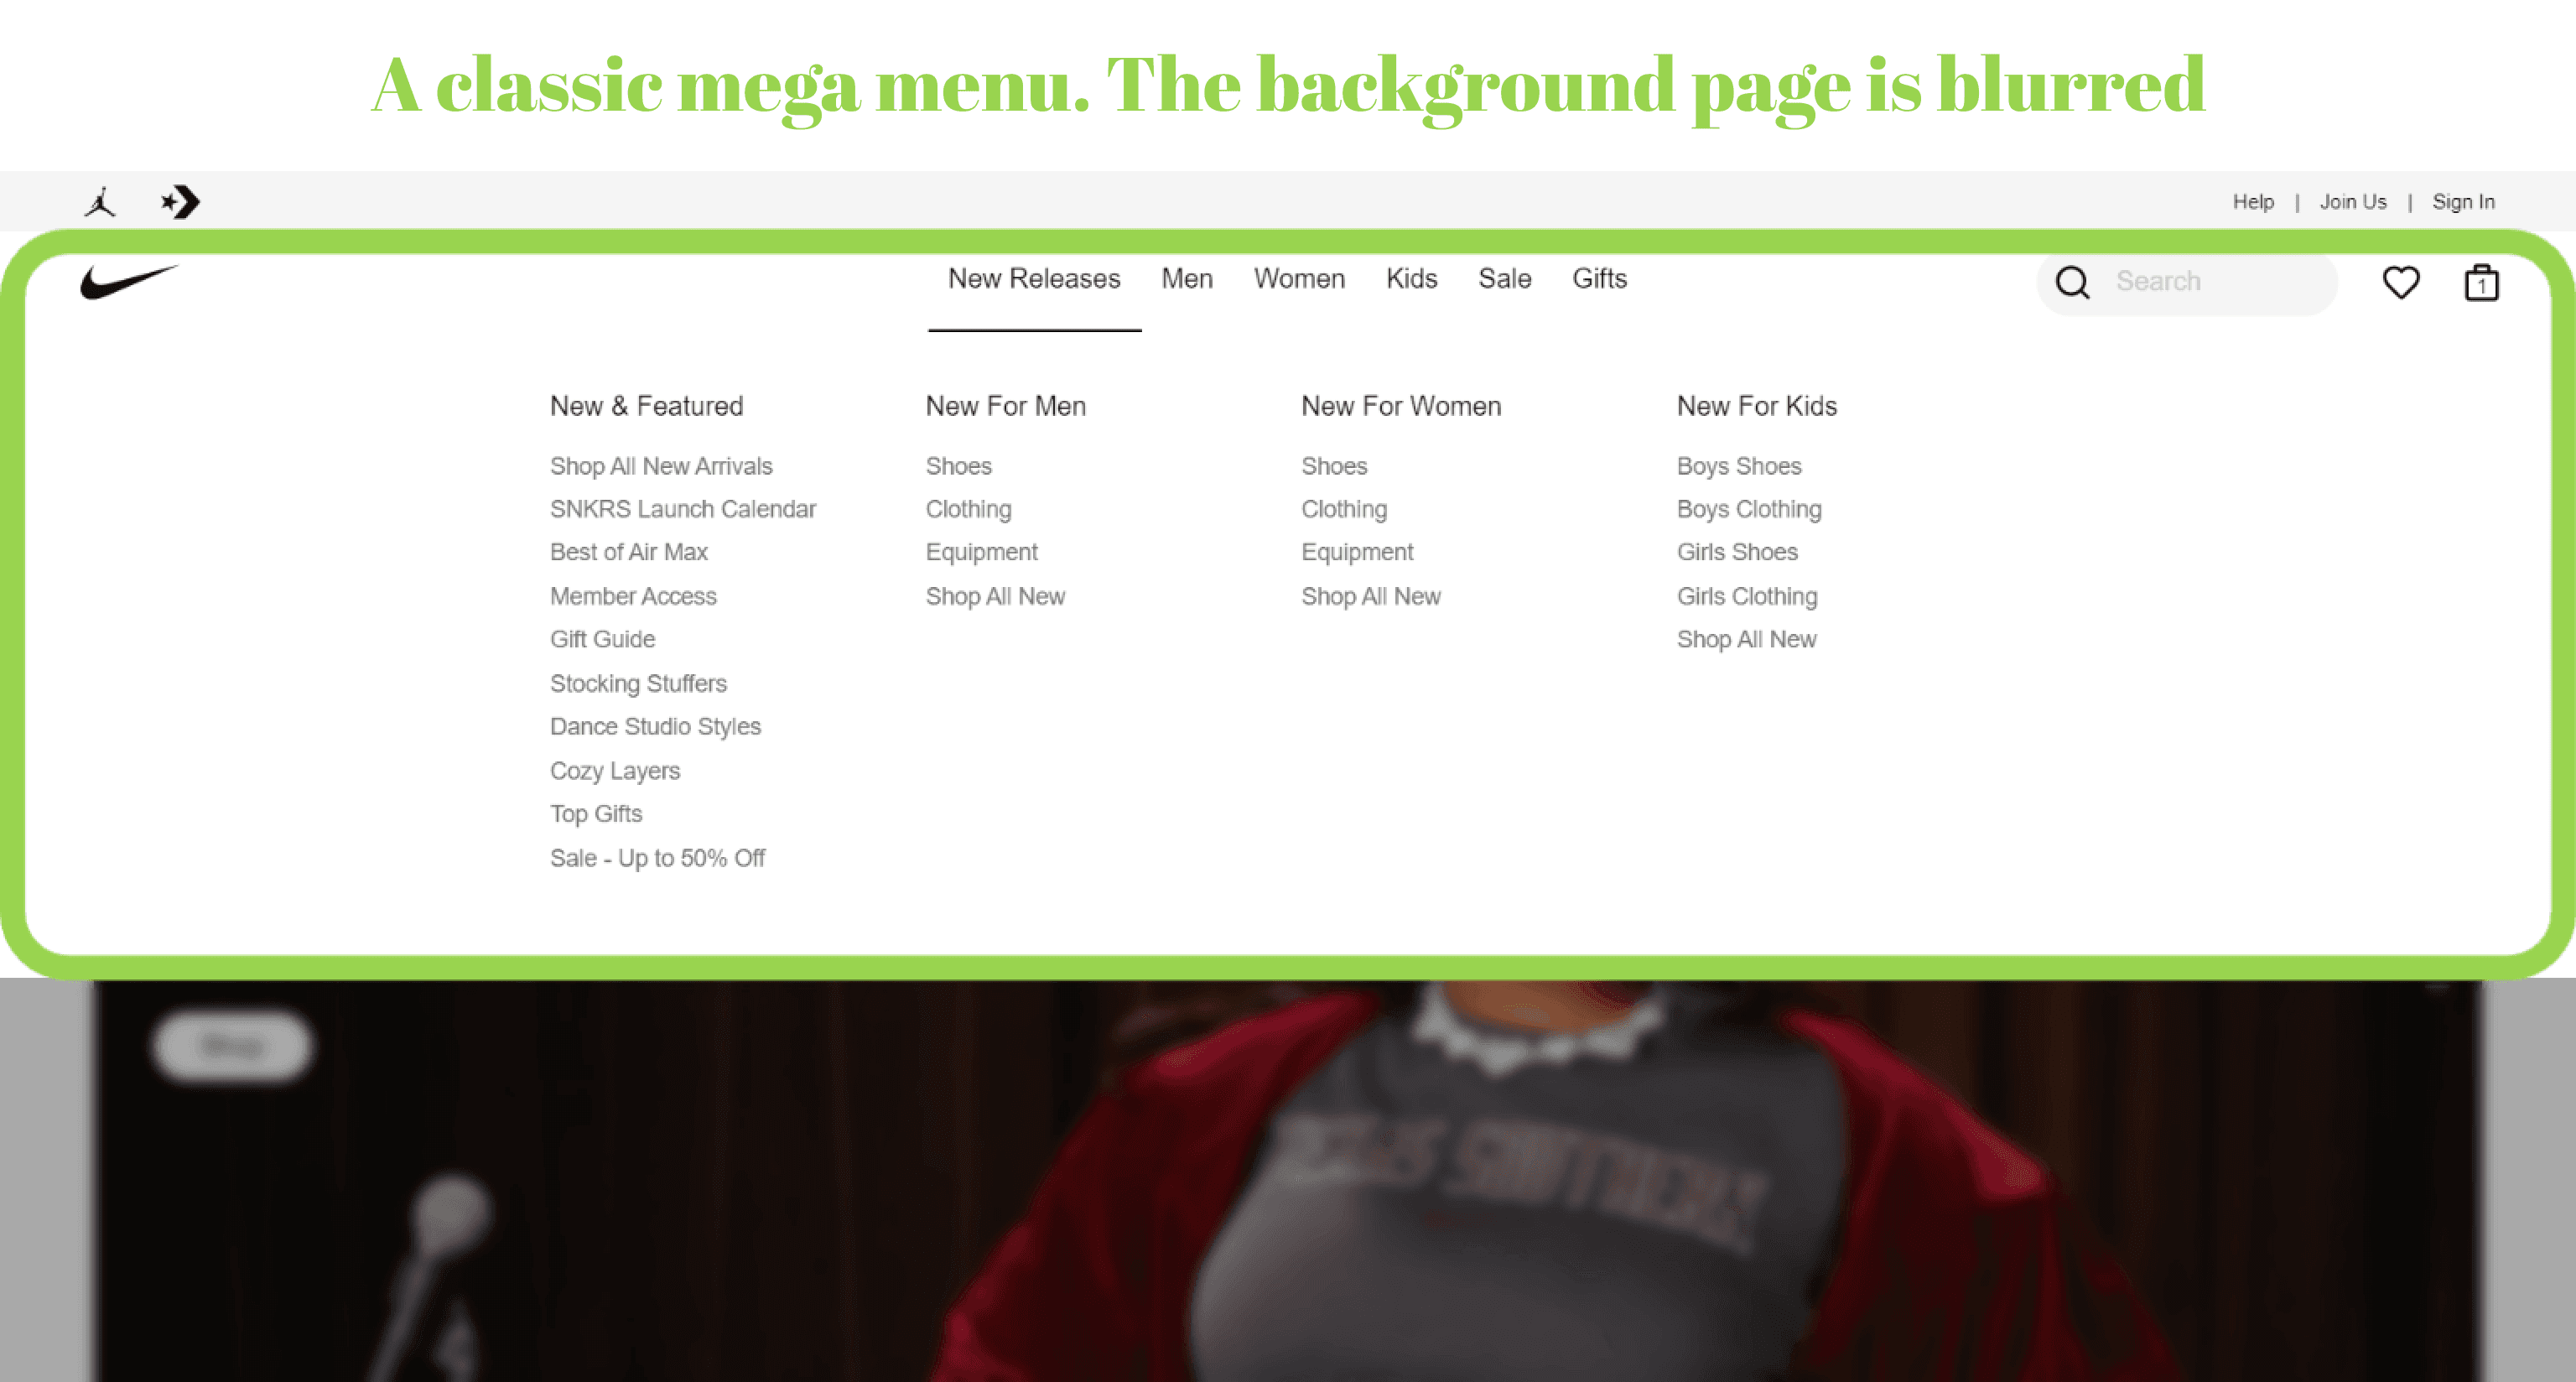 Classic mega menu - Nike website